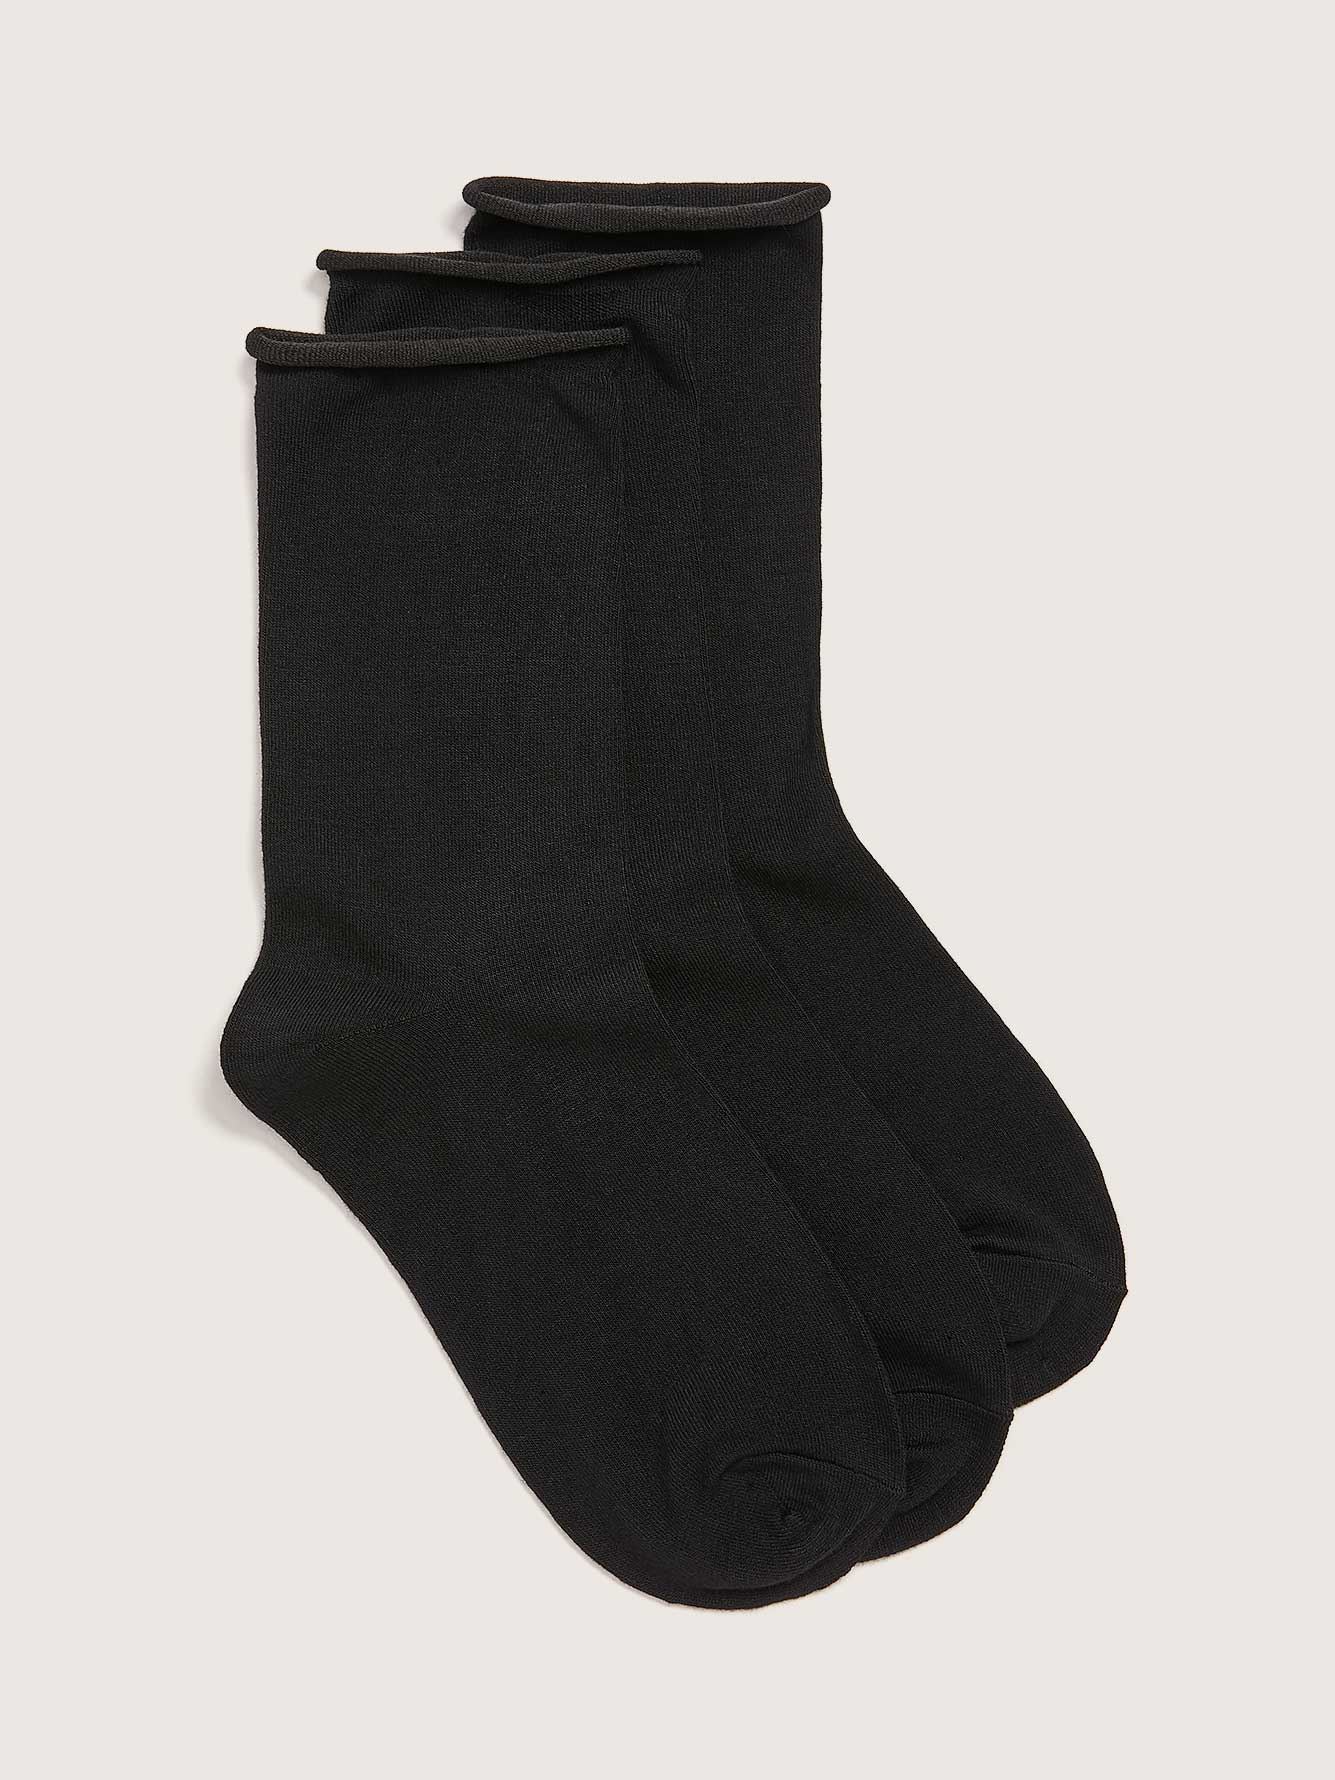 Rolled Edge Socks, Pack of 3 - Addition Elle | Penningtons